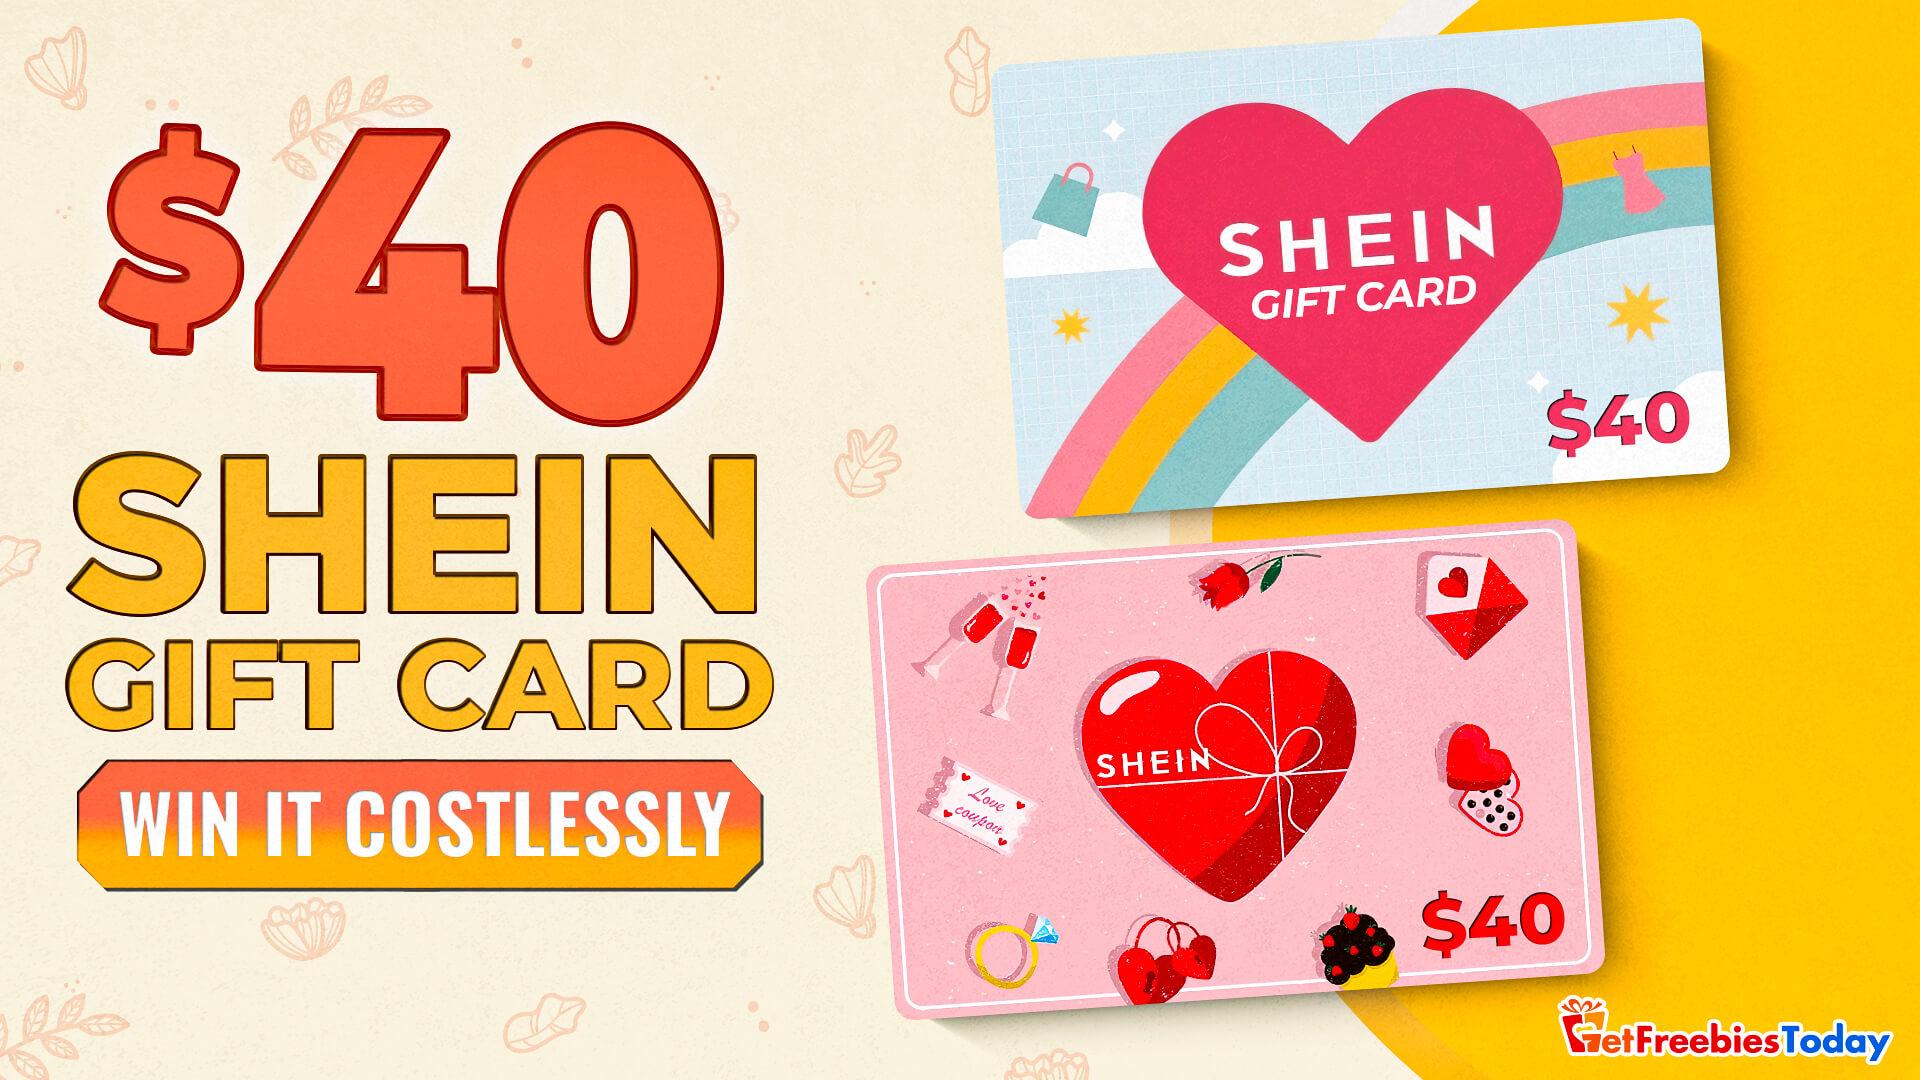 Grab $40 Shein Gift Card In One Shot